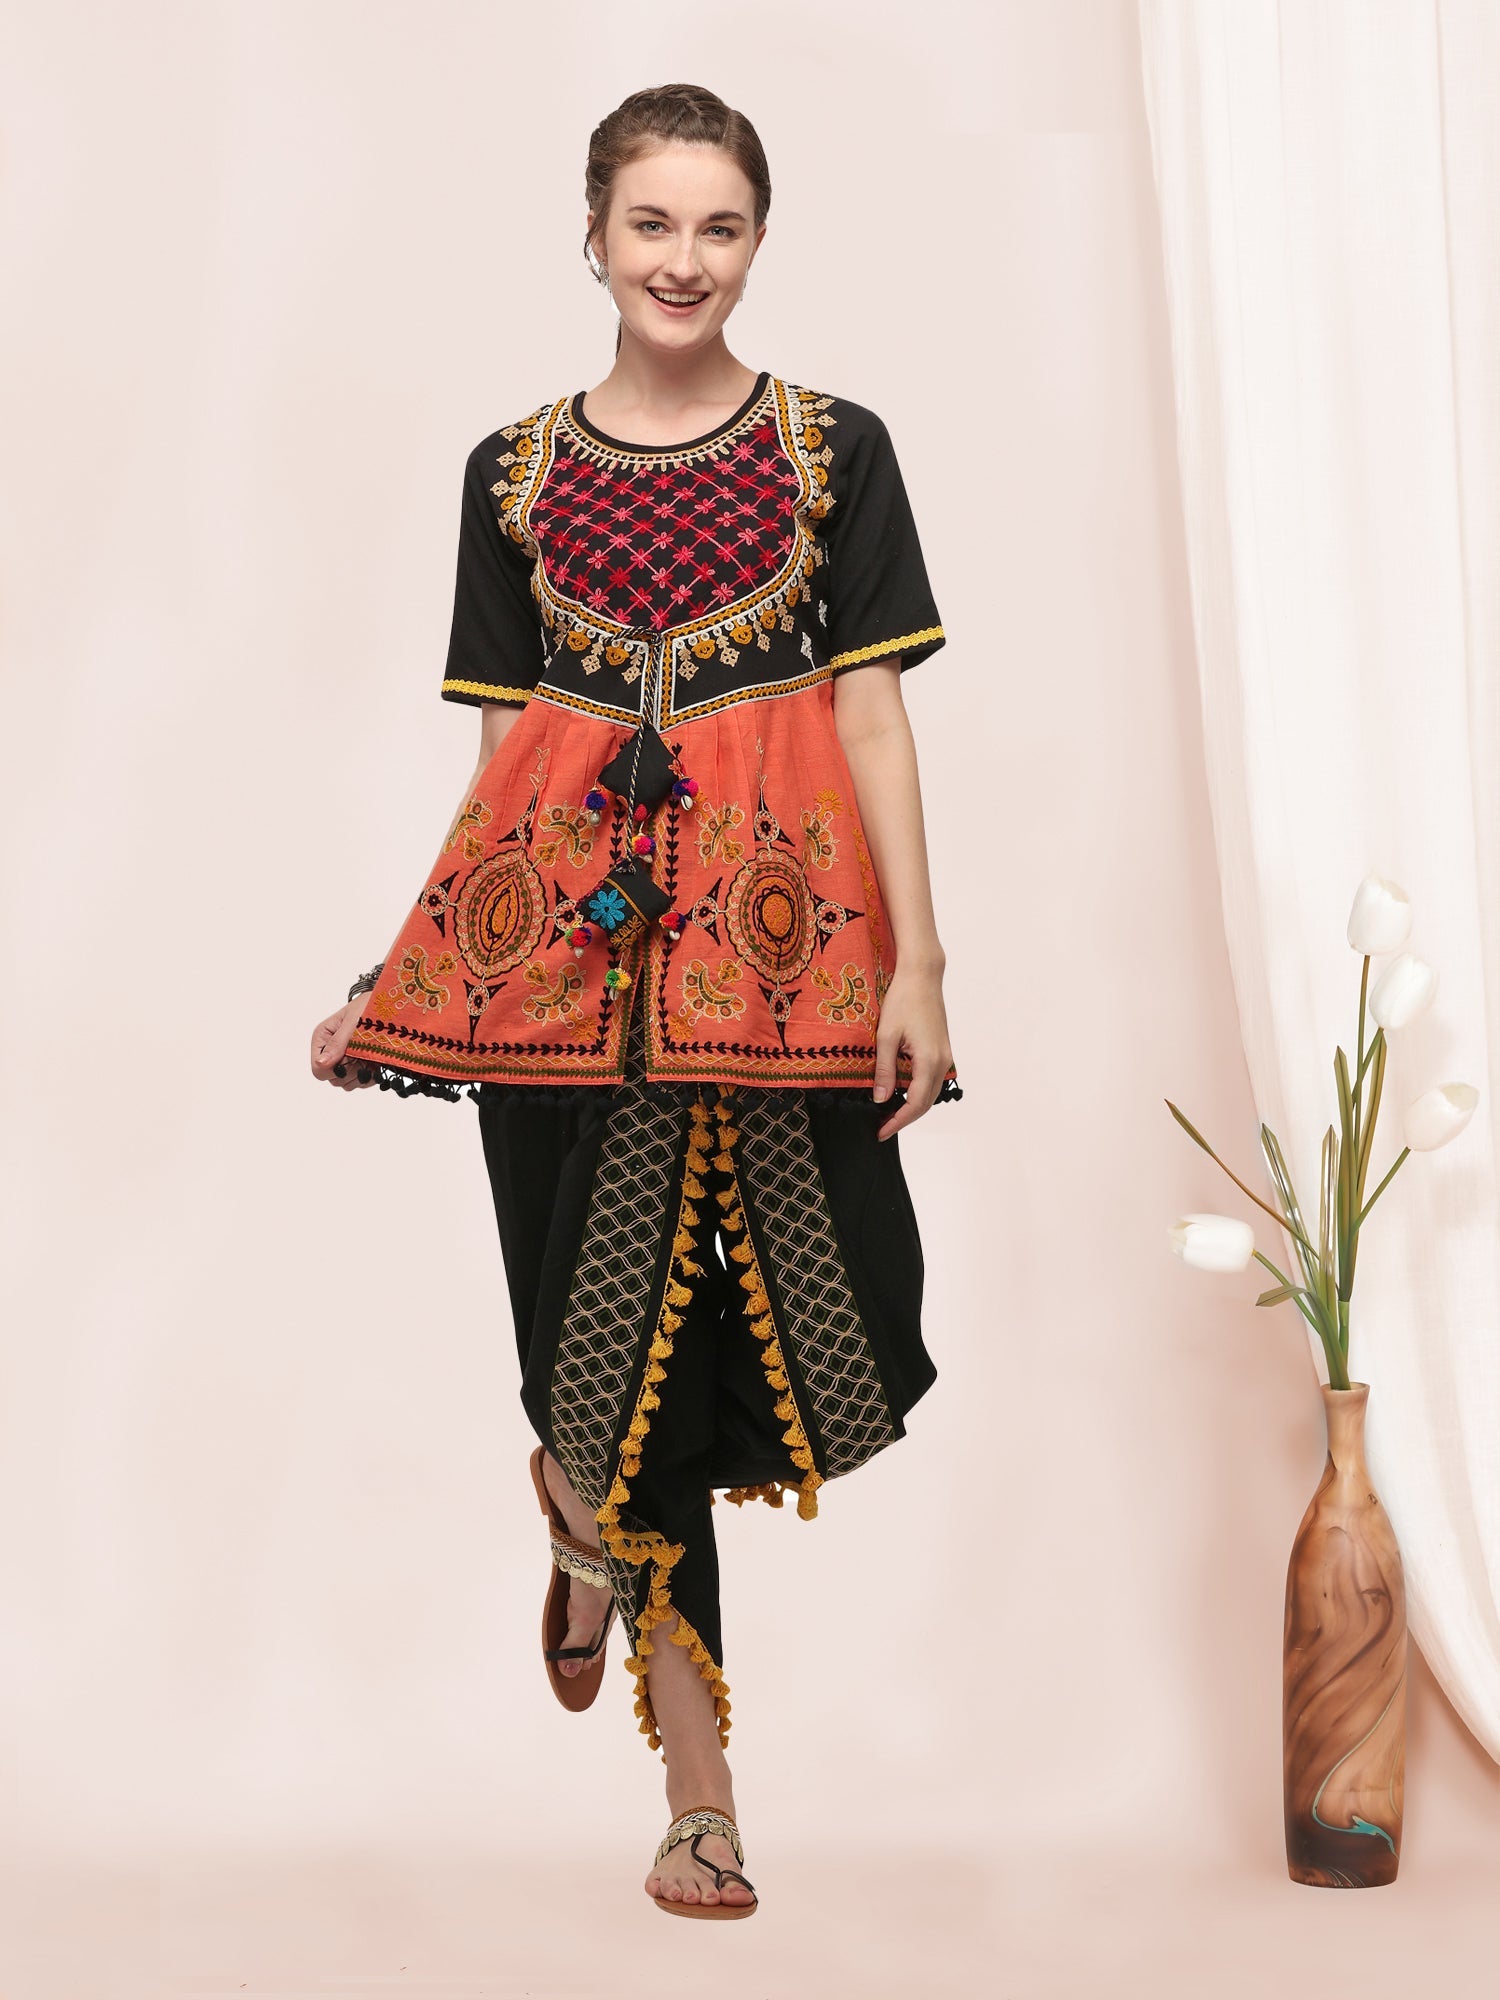 Black maharani yoke embroidered colorful kedia with black tulip pant